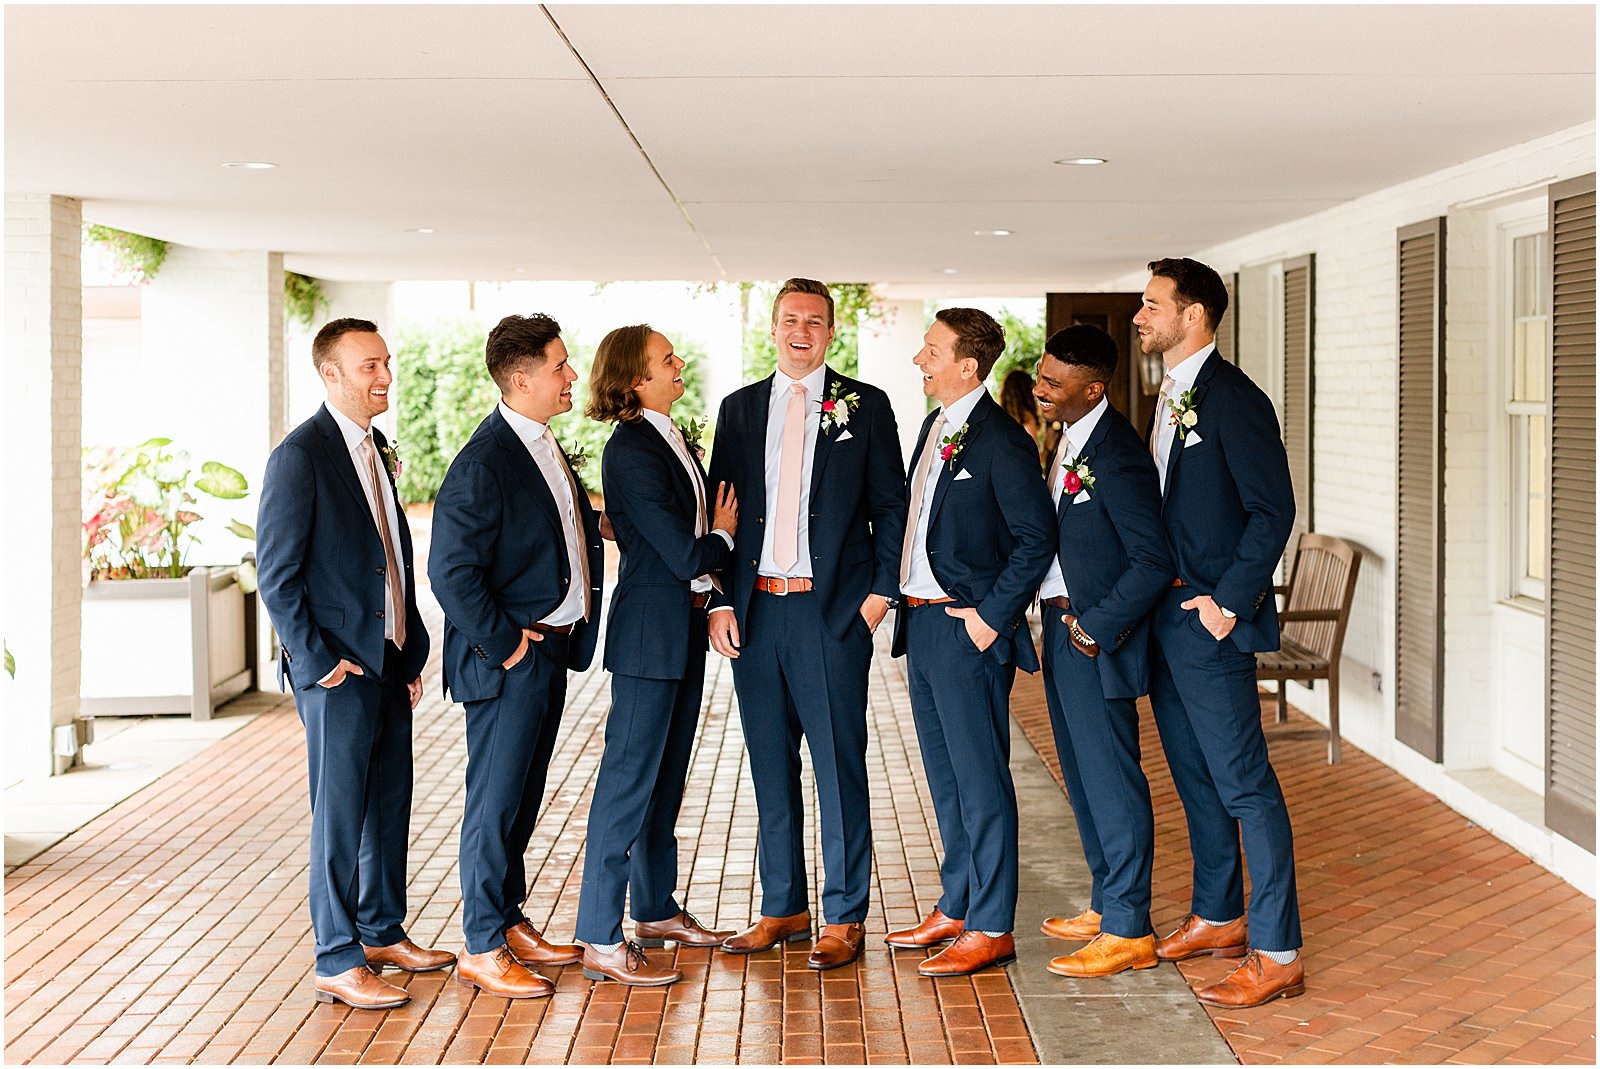 An Evansville Country Club Wedding | Madison and Christiaan | Bret and Brandie | Evansville Photographers | @bretandbrandie-0153.jpg